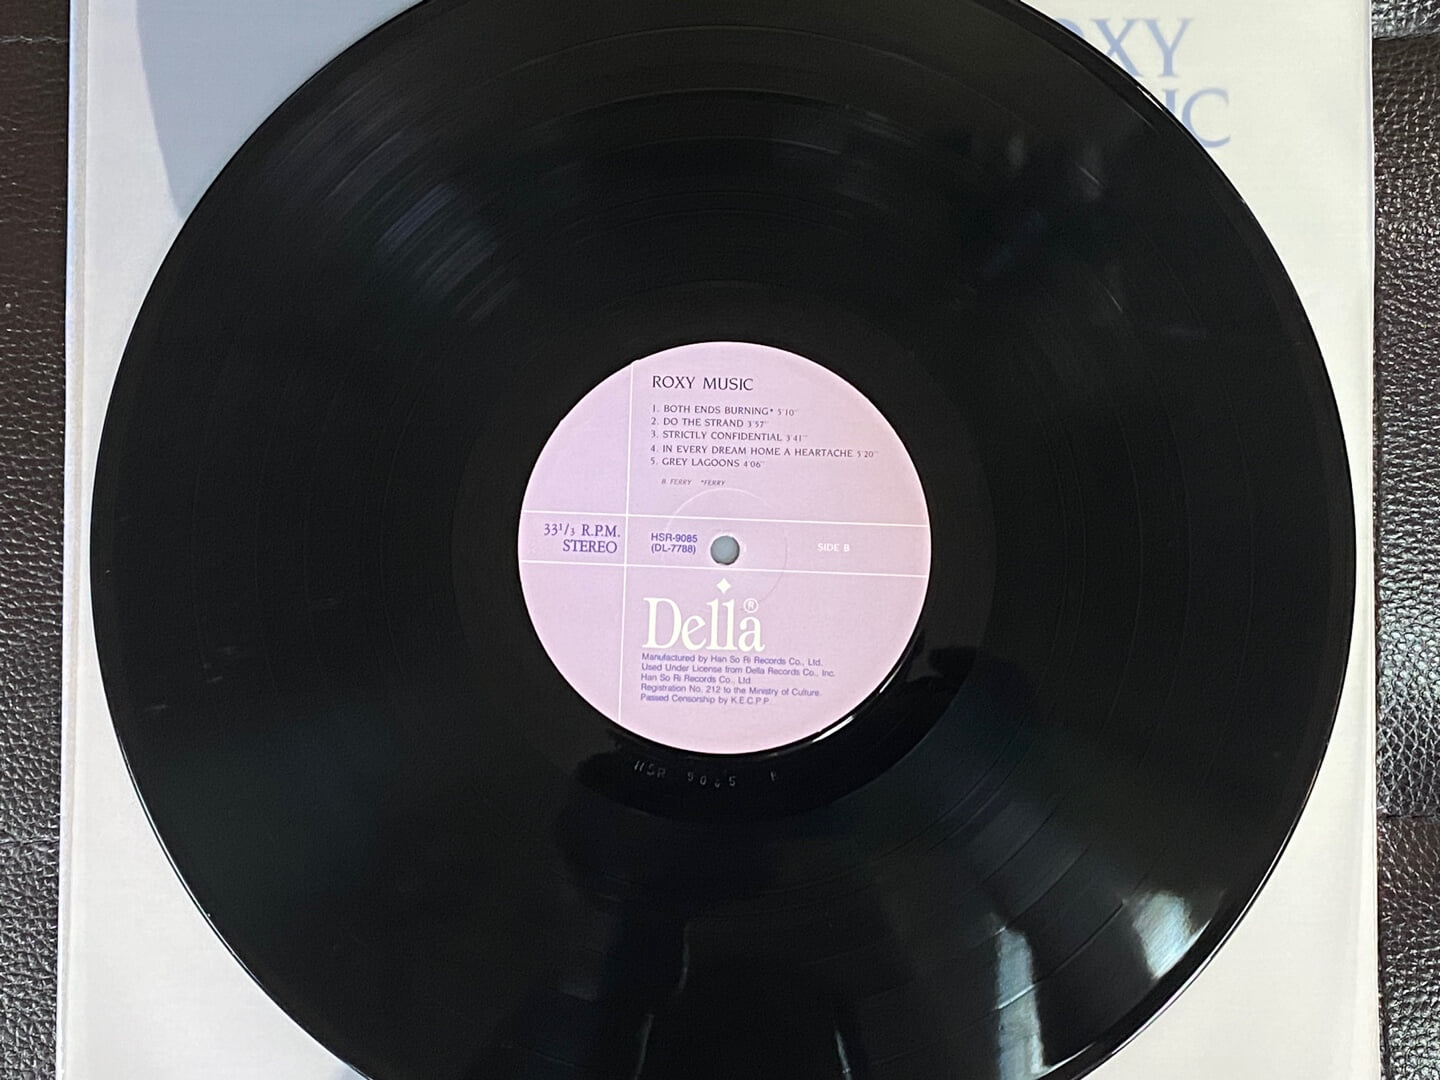 [LP] 록시 뮤직 - Roxy Music - A Song For Europe LP [한소리-라이센스반]